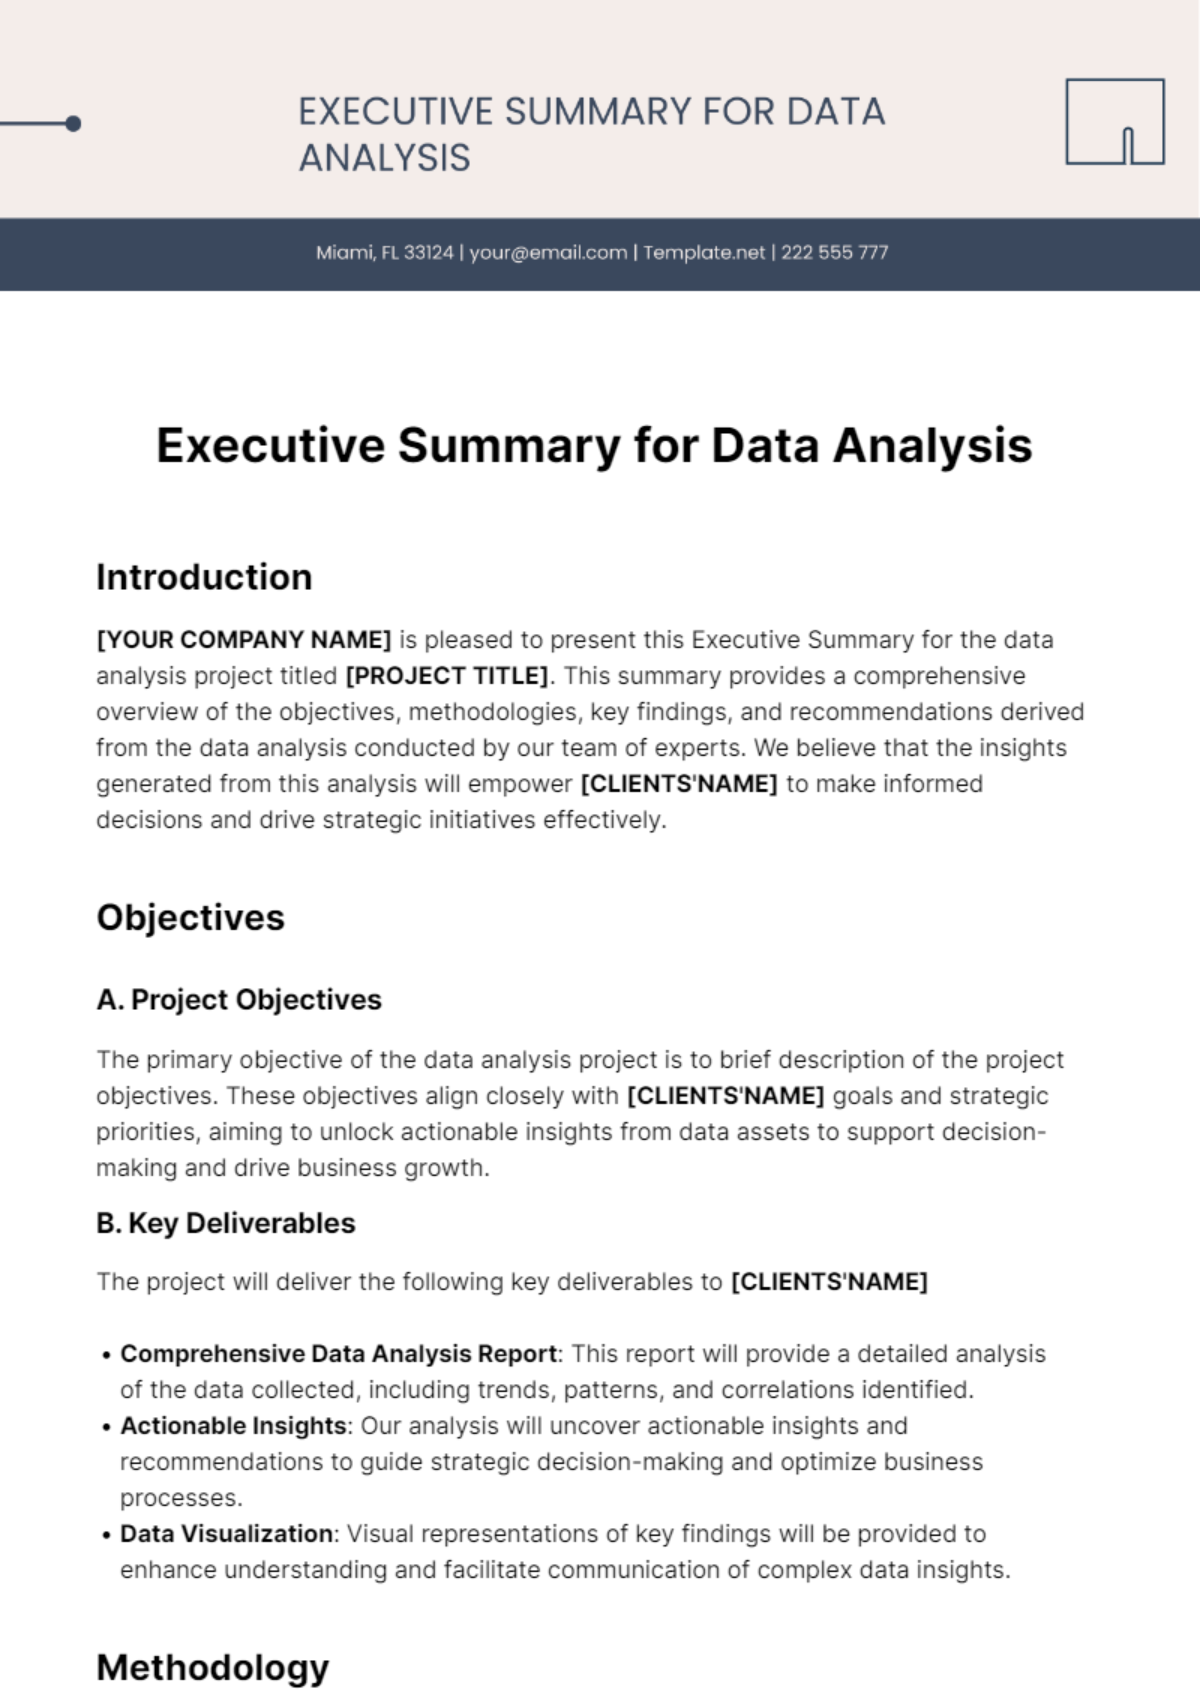 Executive Summary for Data Analysis Template